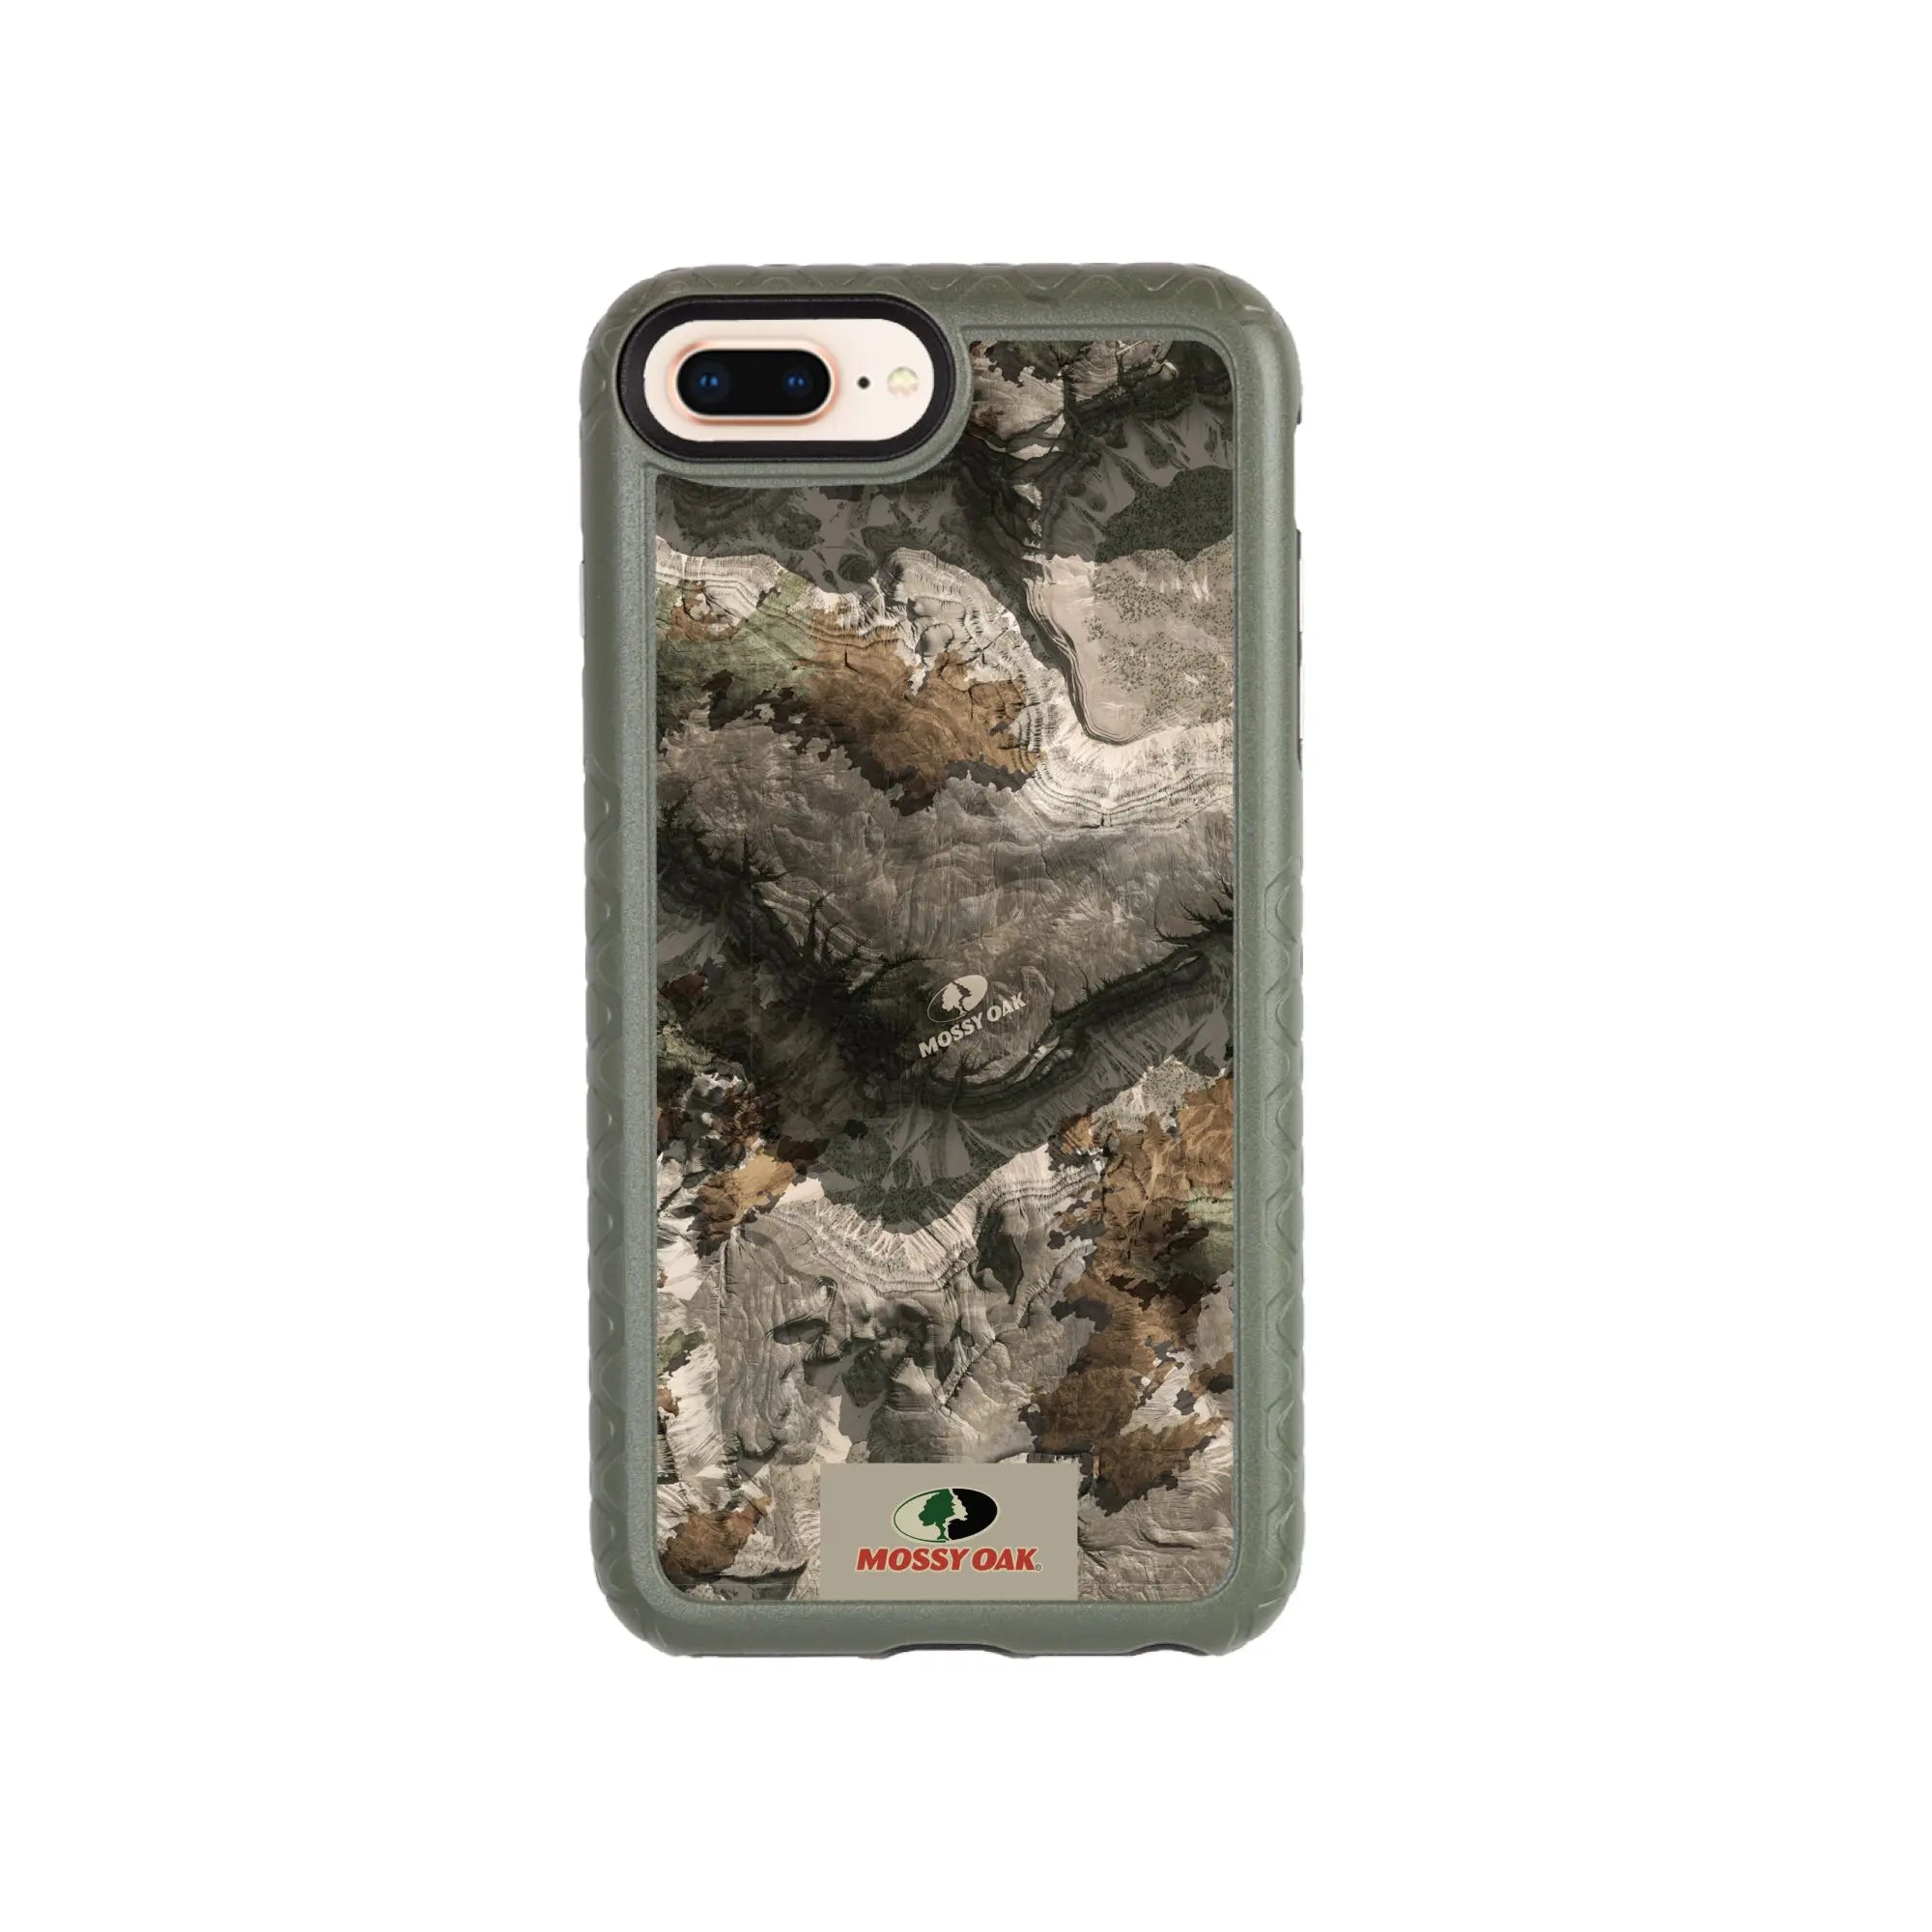 Mossy Oak Fortitude Series for Apple iPhone 6/7/8 Plus - Terra Gila - Custom Case - OliveDrabGreen - cellhelmet